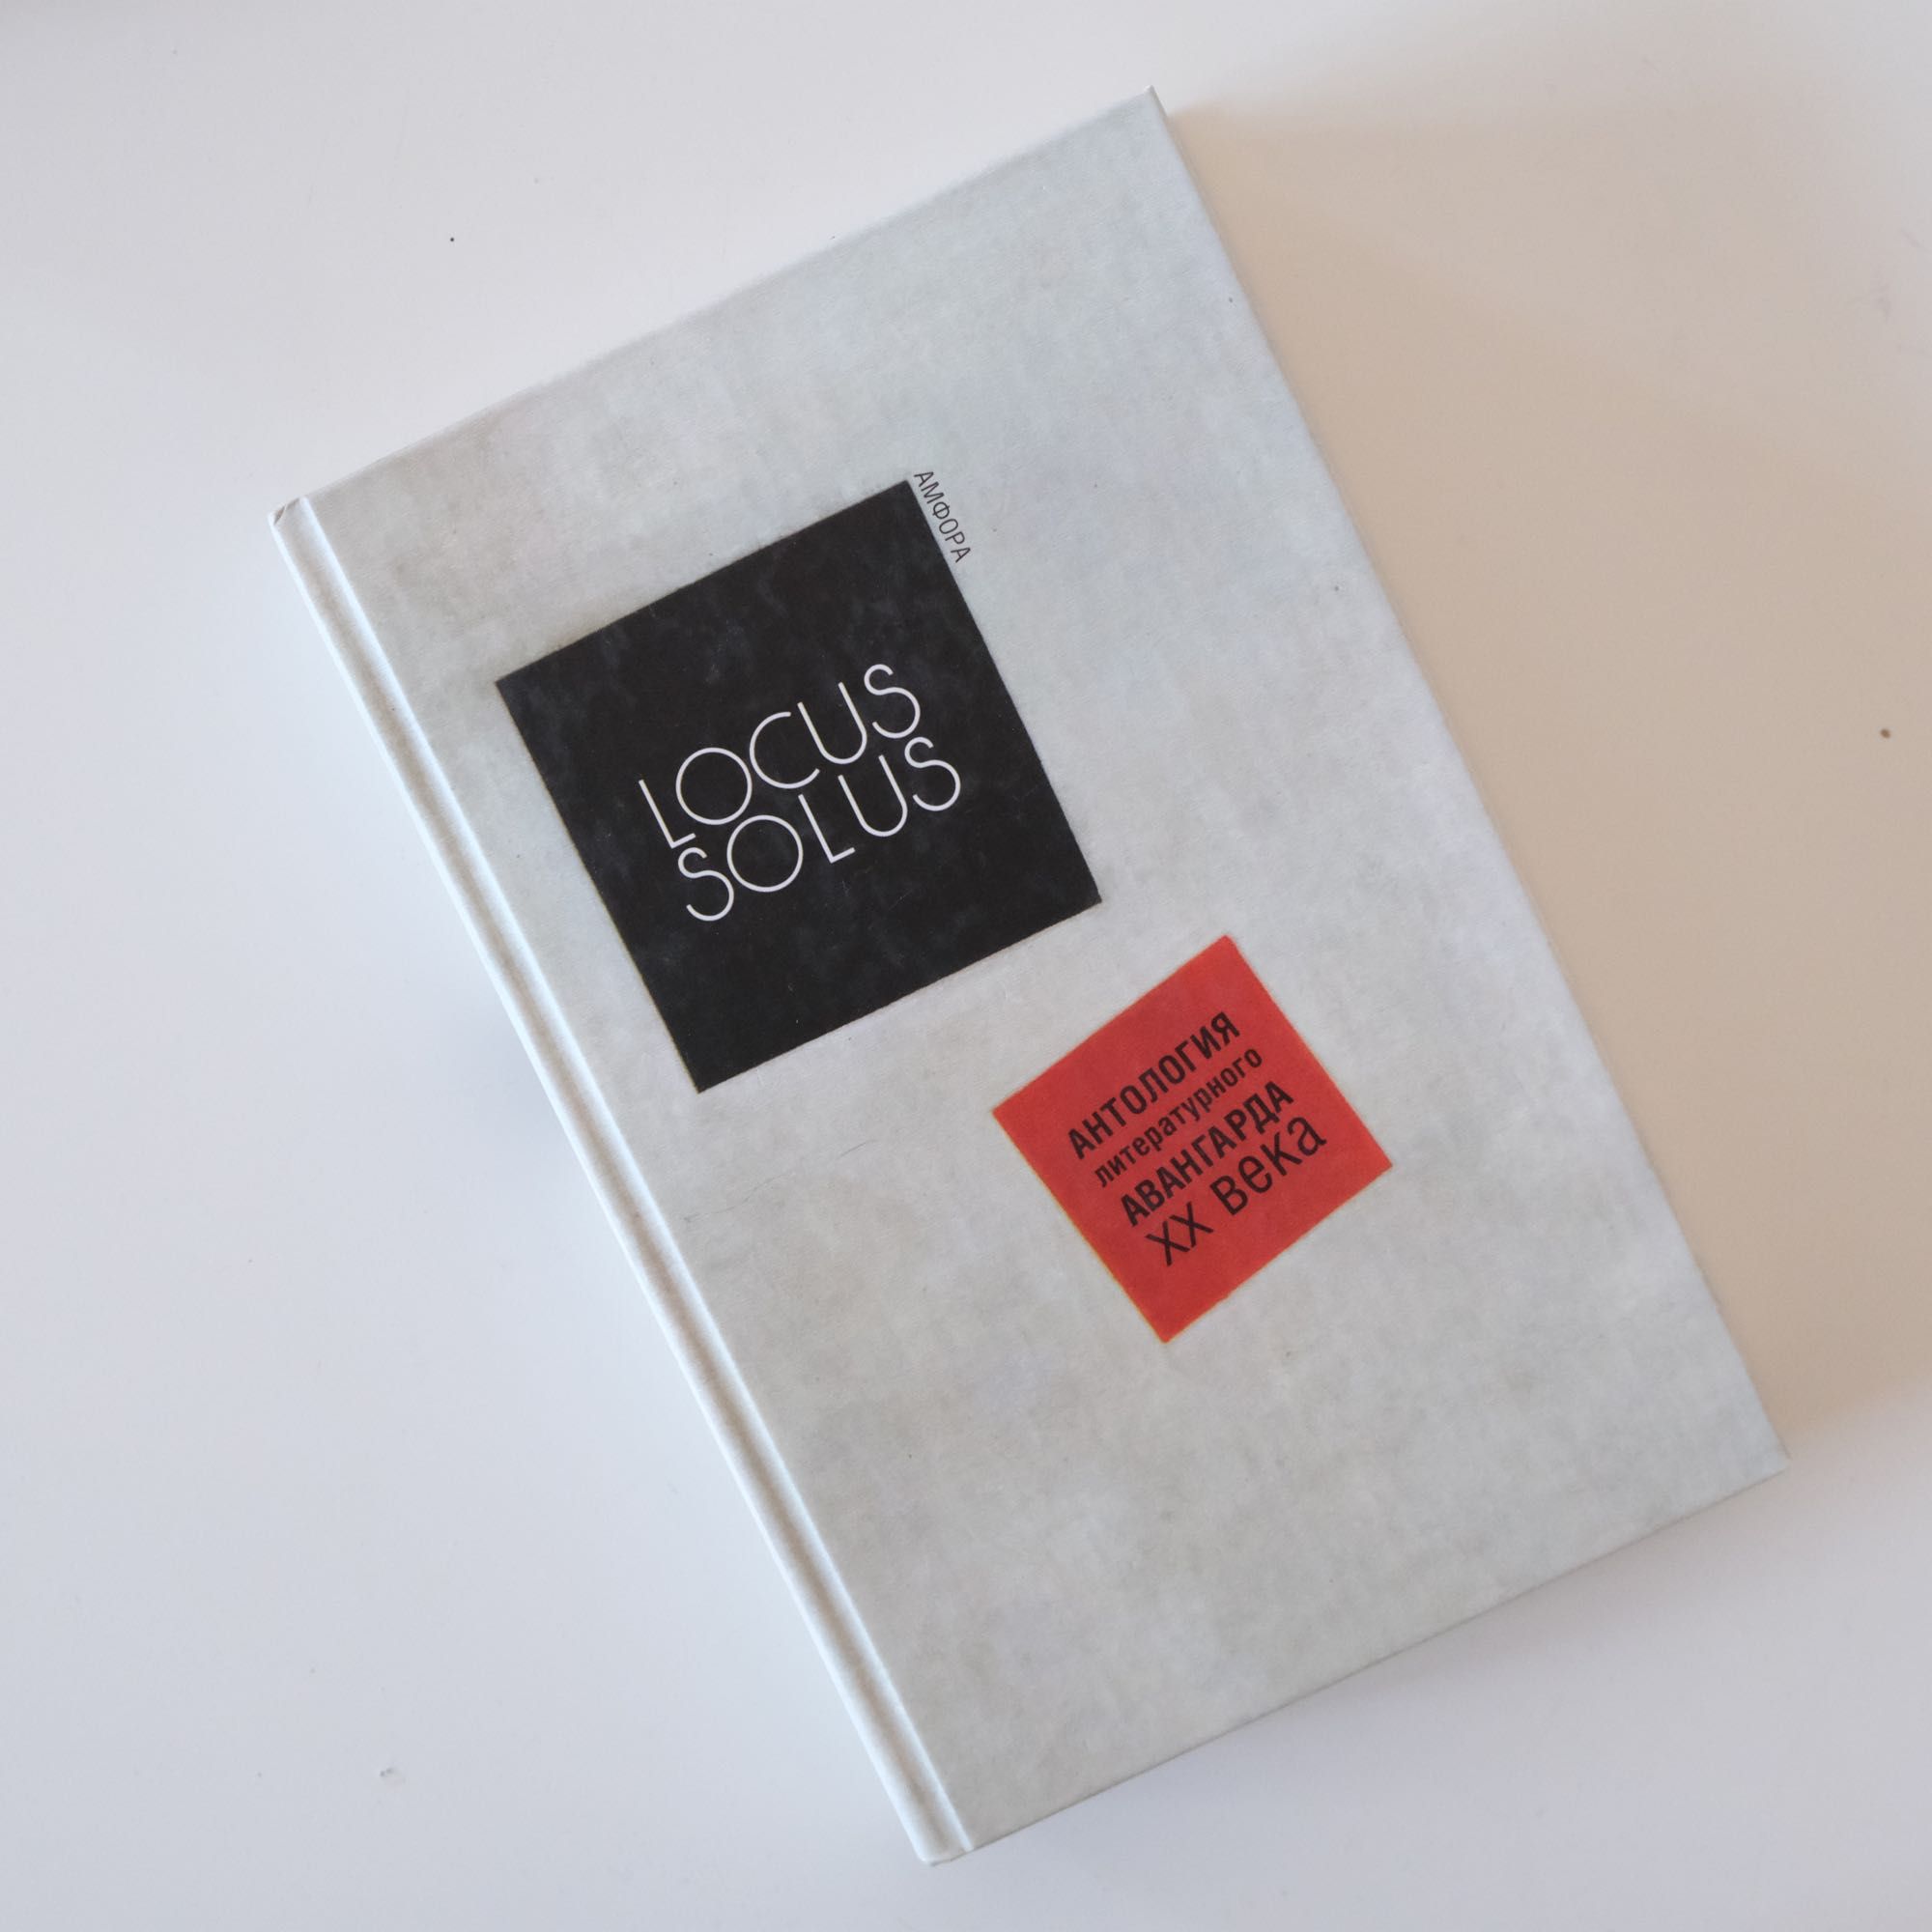 Locus Solus. Антология литературного авангарда XX век, Театр парадокса